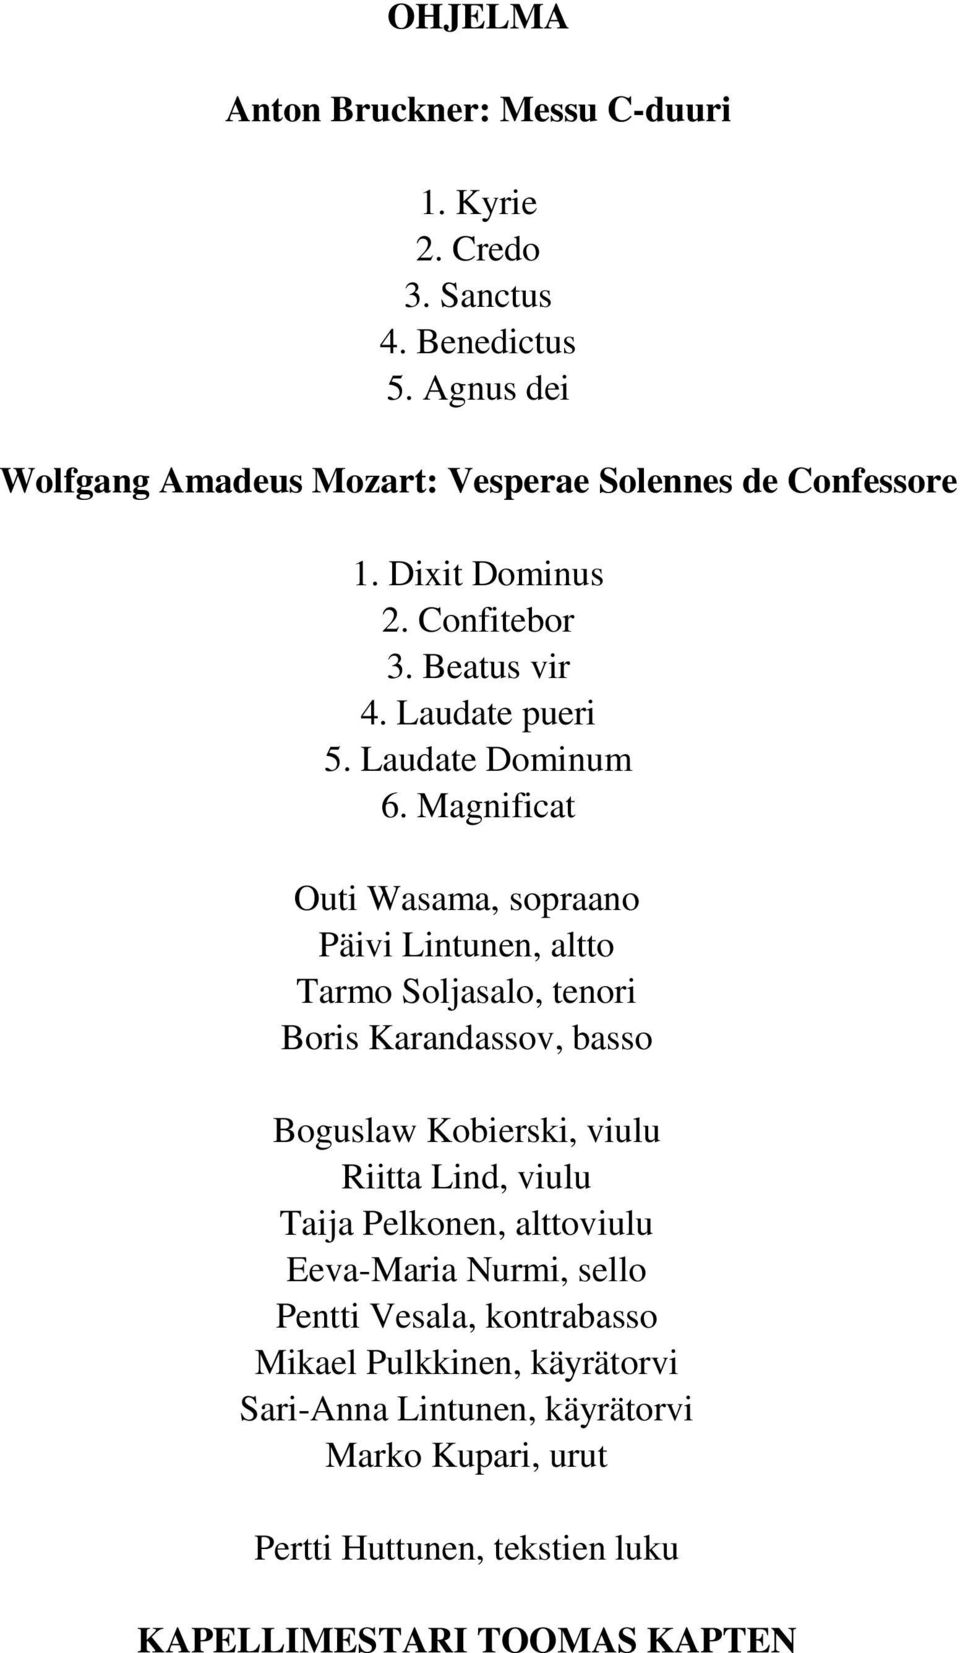 Magnificat Outi Wasama, sopraano Päivi Lintunen, altto Tarmo Soljasalo, tenori Boris Karandassov, basso Boguslaw Kobierski, viulu Riitta Lind, viulu